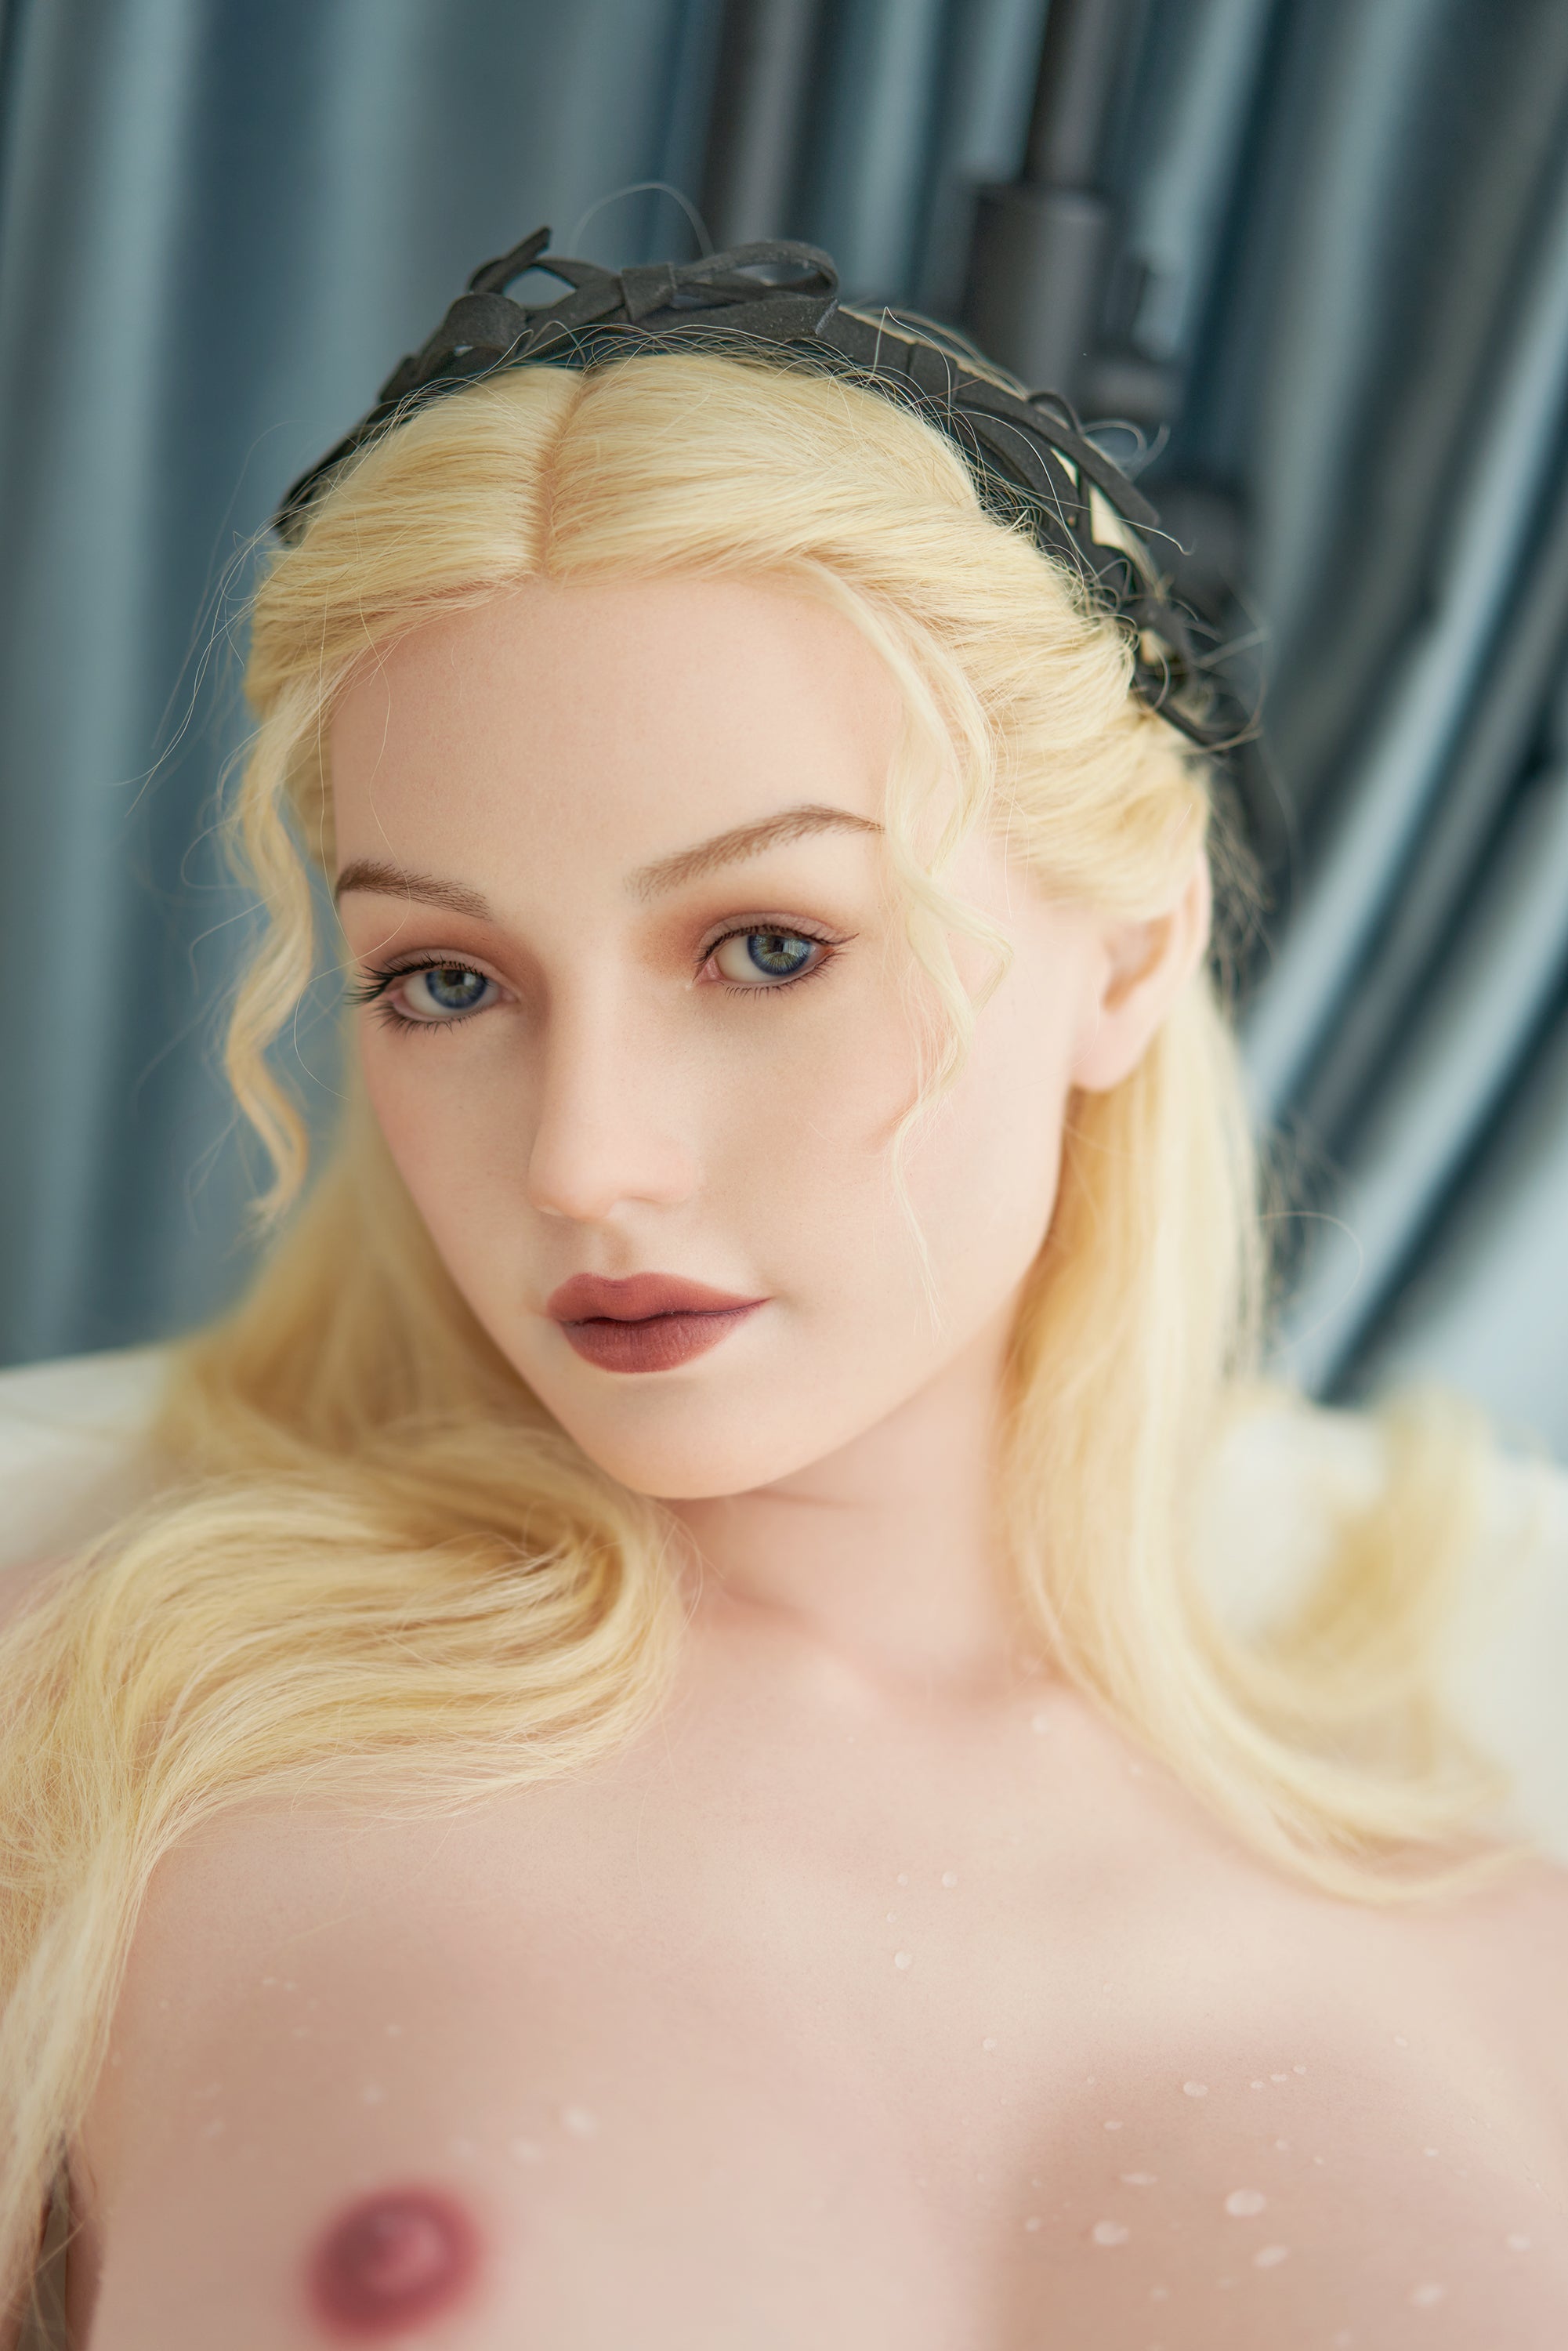 Zelex Doll X165 cm F Silicone - Oriana (CN) | Buy Sex Dolls at DOLLS ACTUALLY